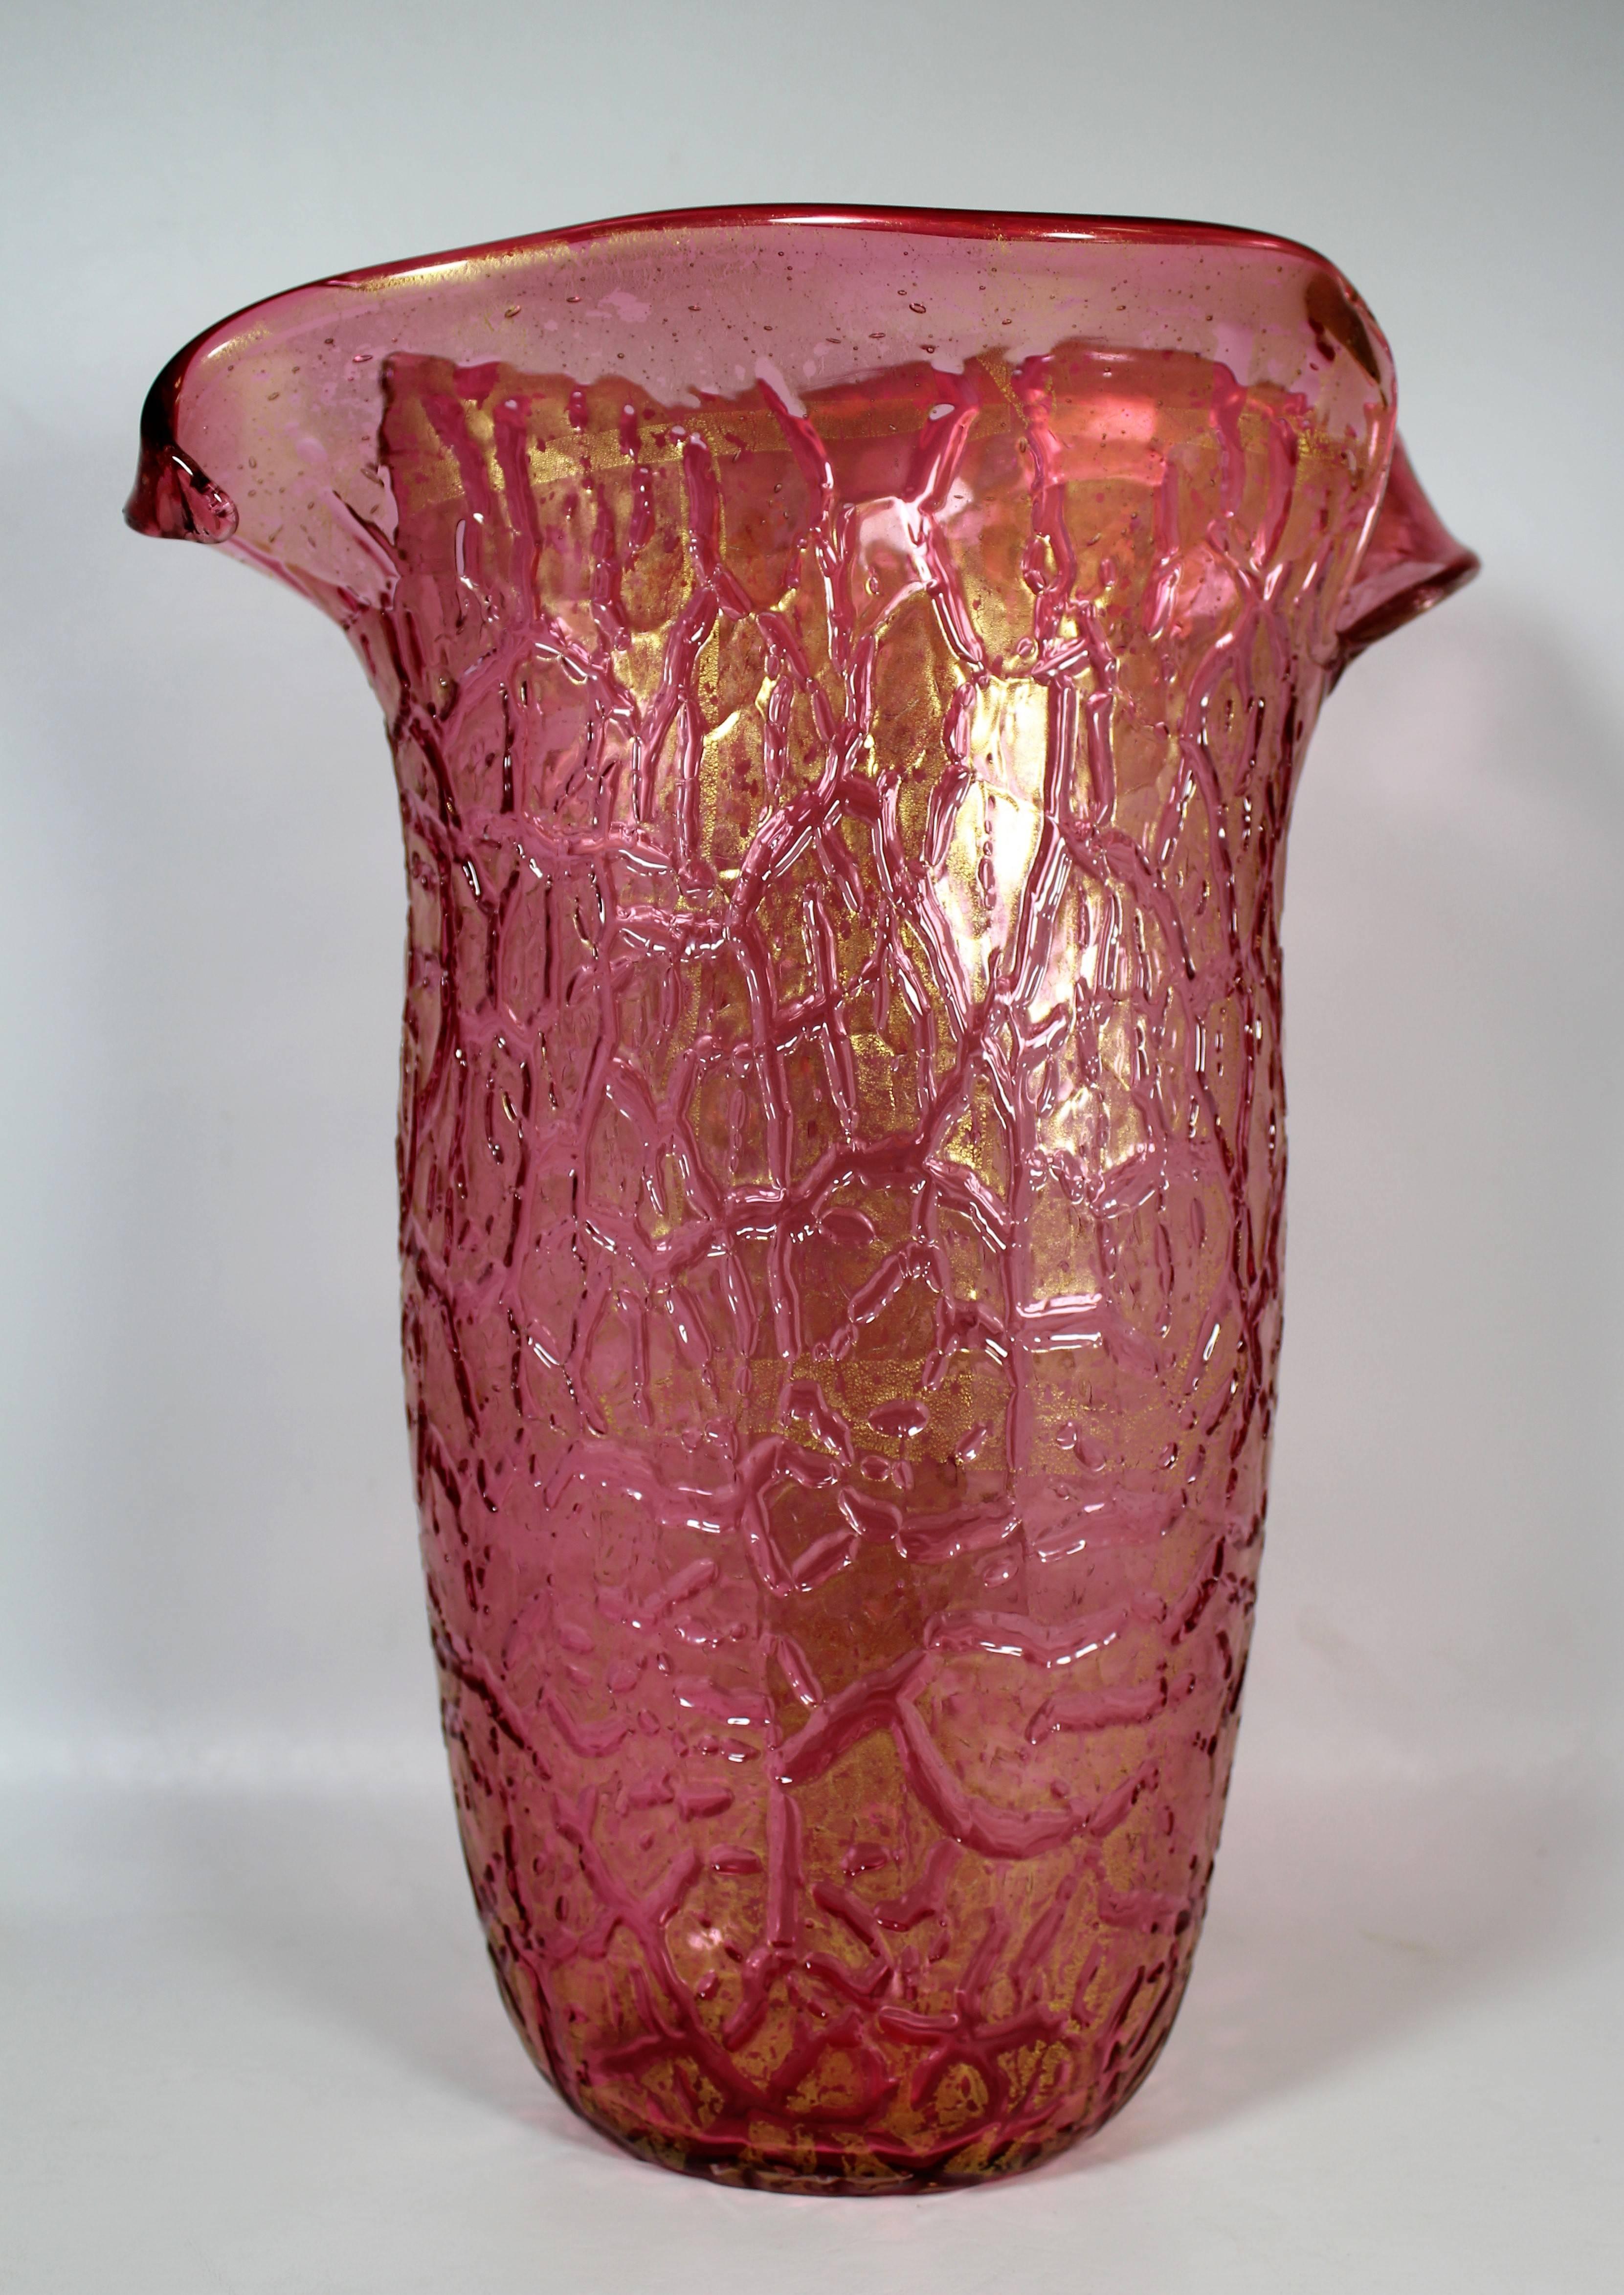 Enrico Camozzo Murano glass vase with gold flecks.